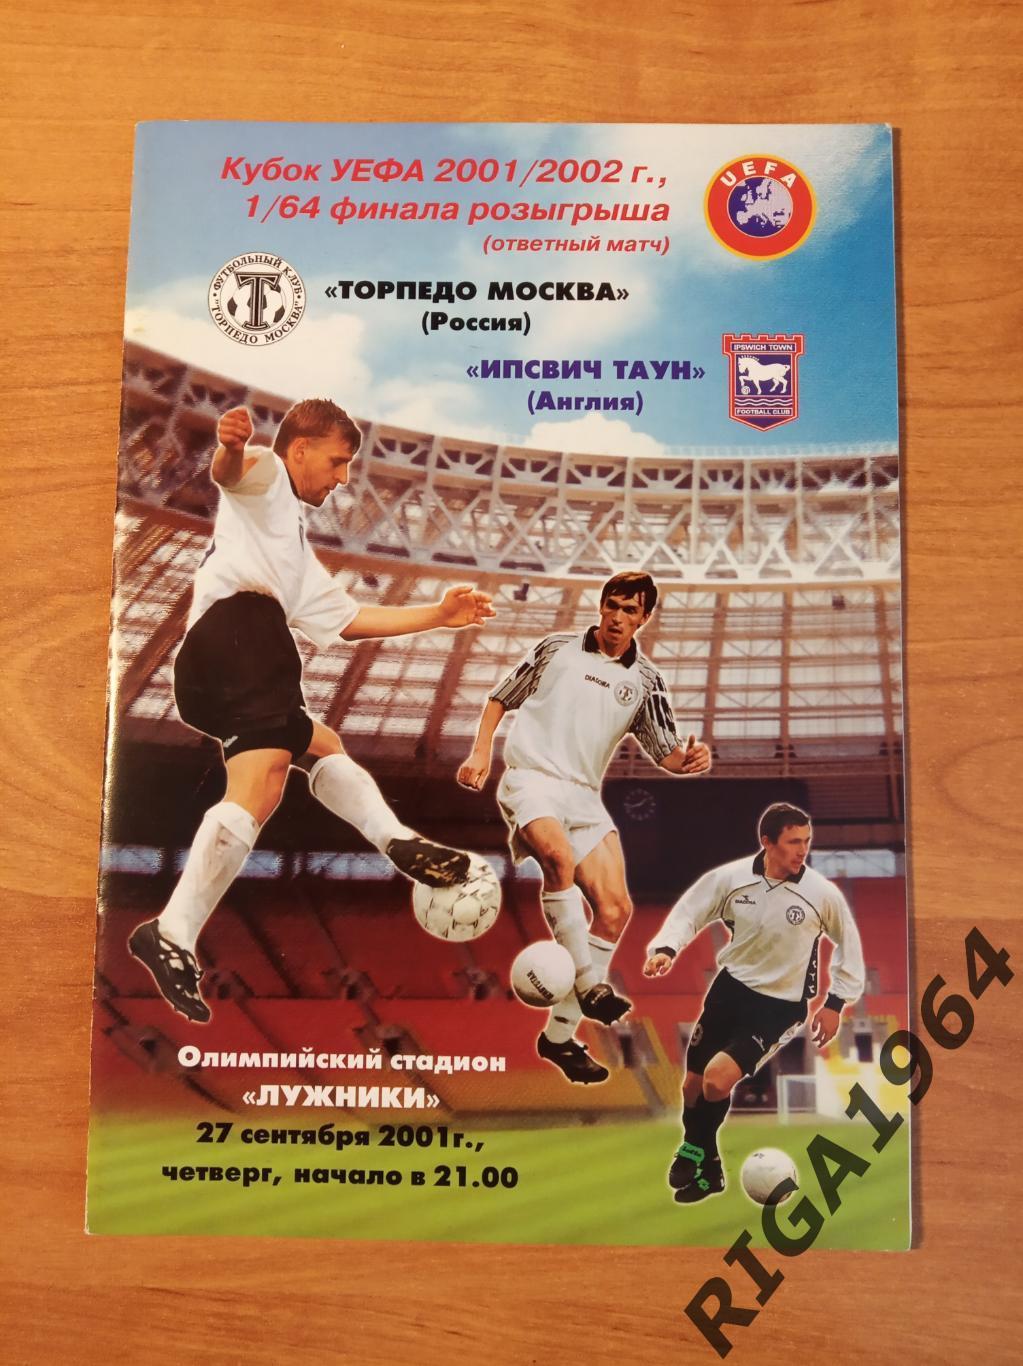 Кубок УЕФА 2001/02 Торпедо Москва-Ипсвич Англия (см. описание)